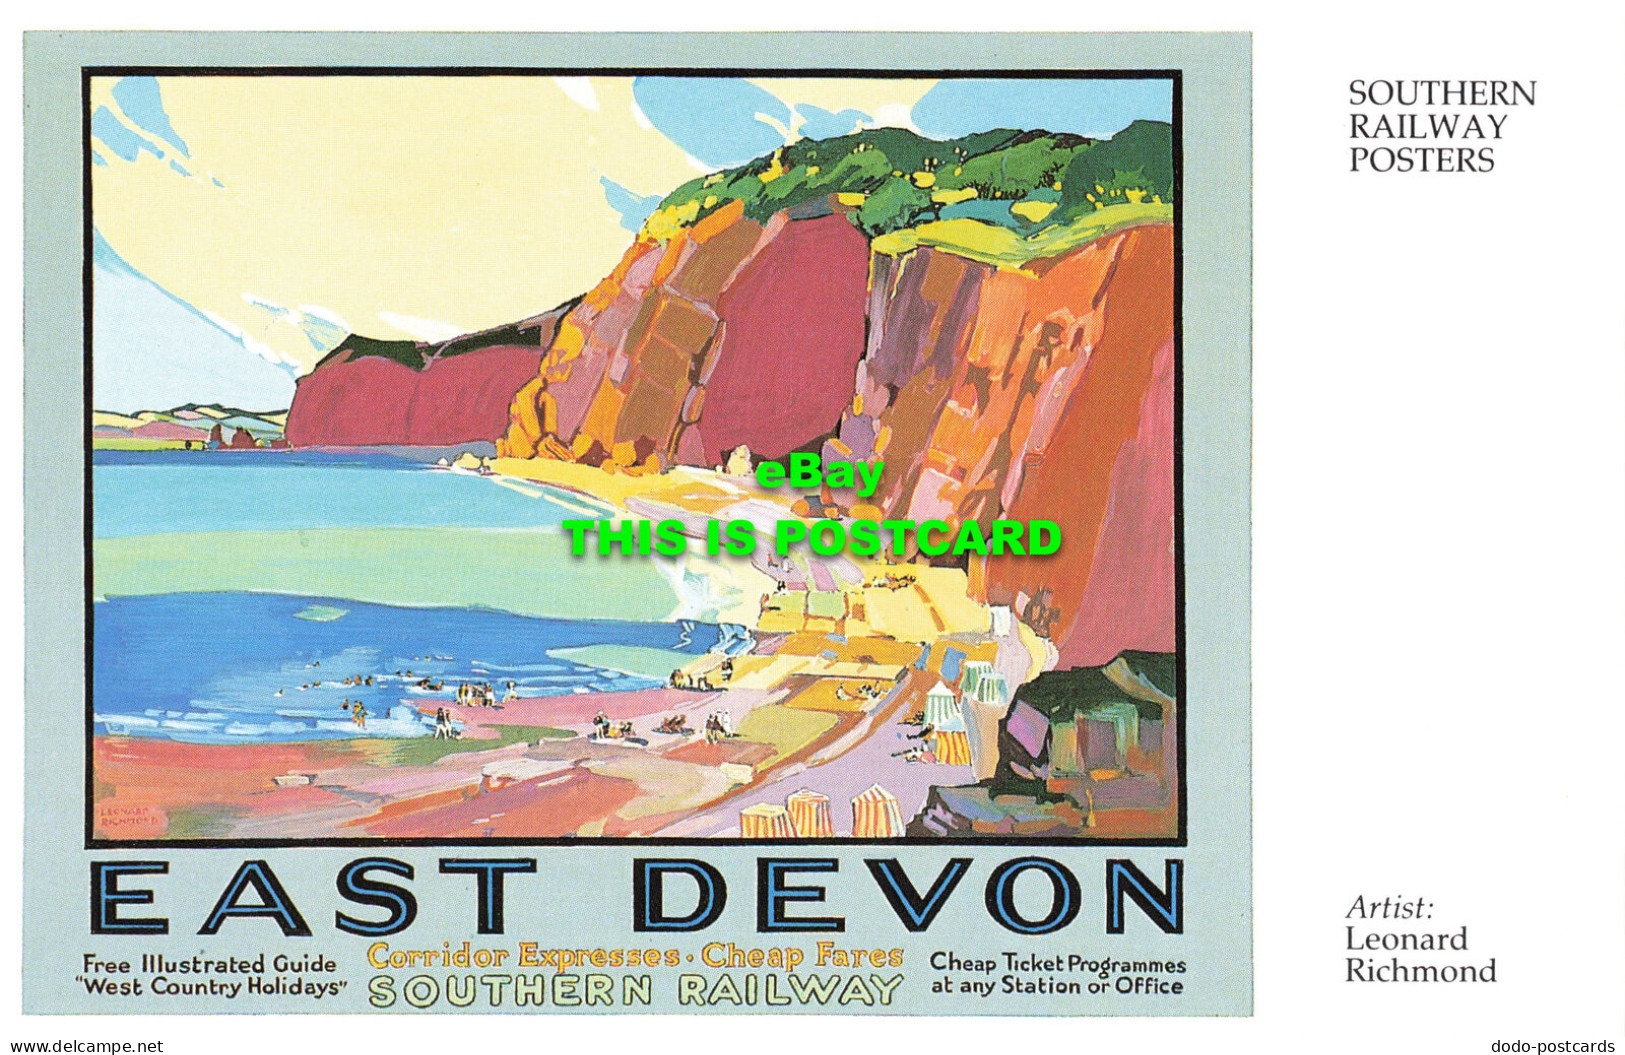 R569541 Southern Railway Posters. East Devon. Corridor Express. Cheap Fares. Leo - World